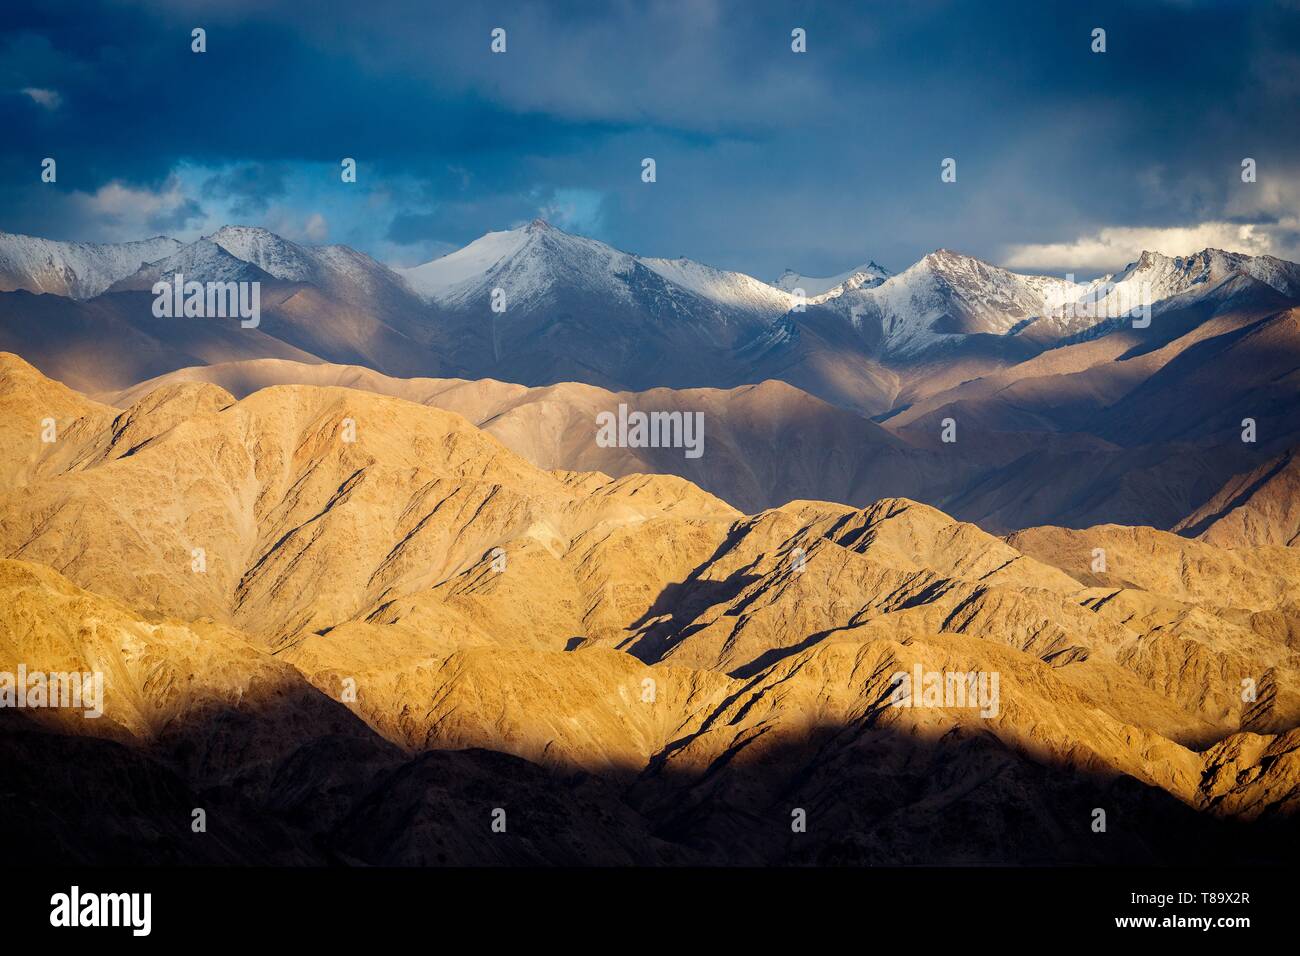 India, Jammu and Kashmir State, Ladakh, Indus Valley, mountainous relief of the Ladakh range Stock Photo